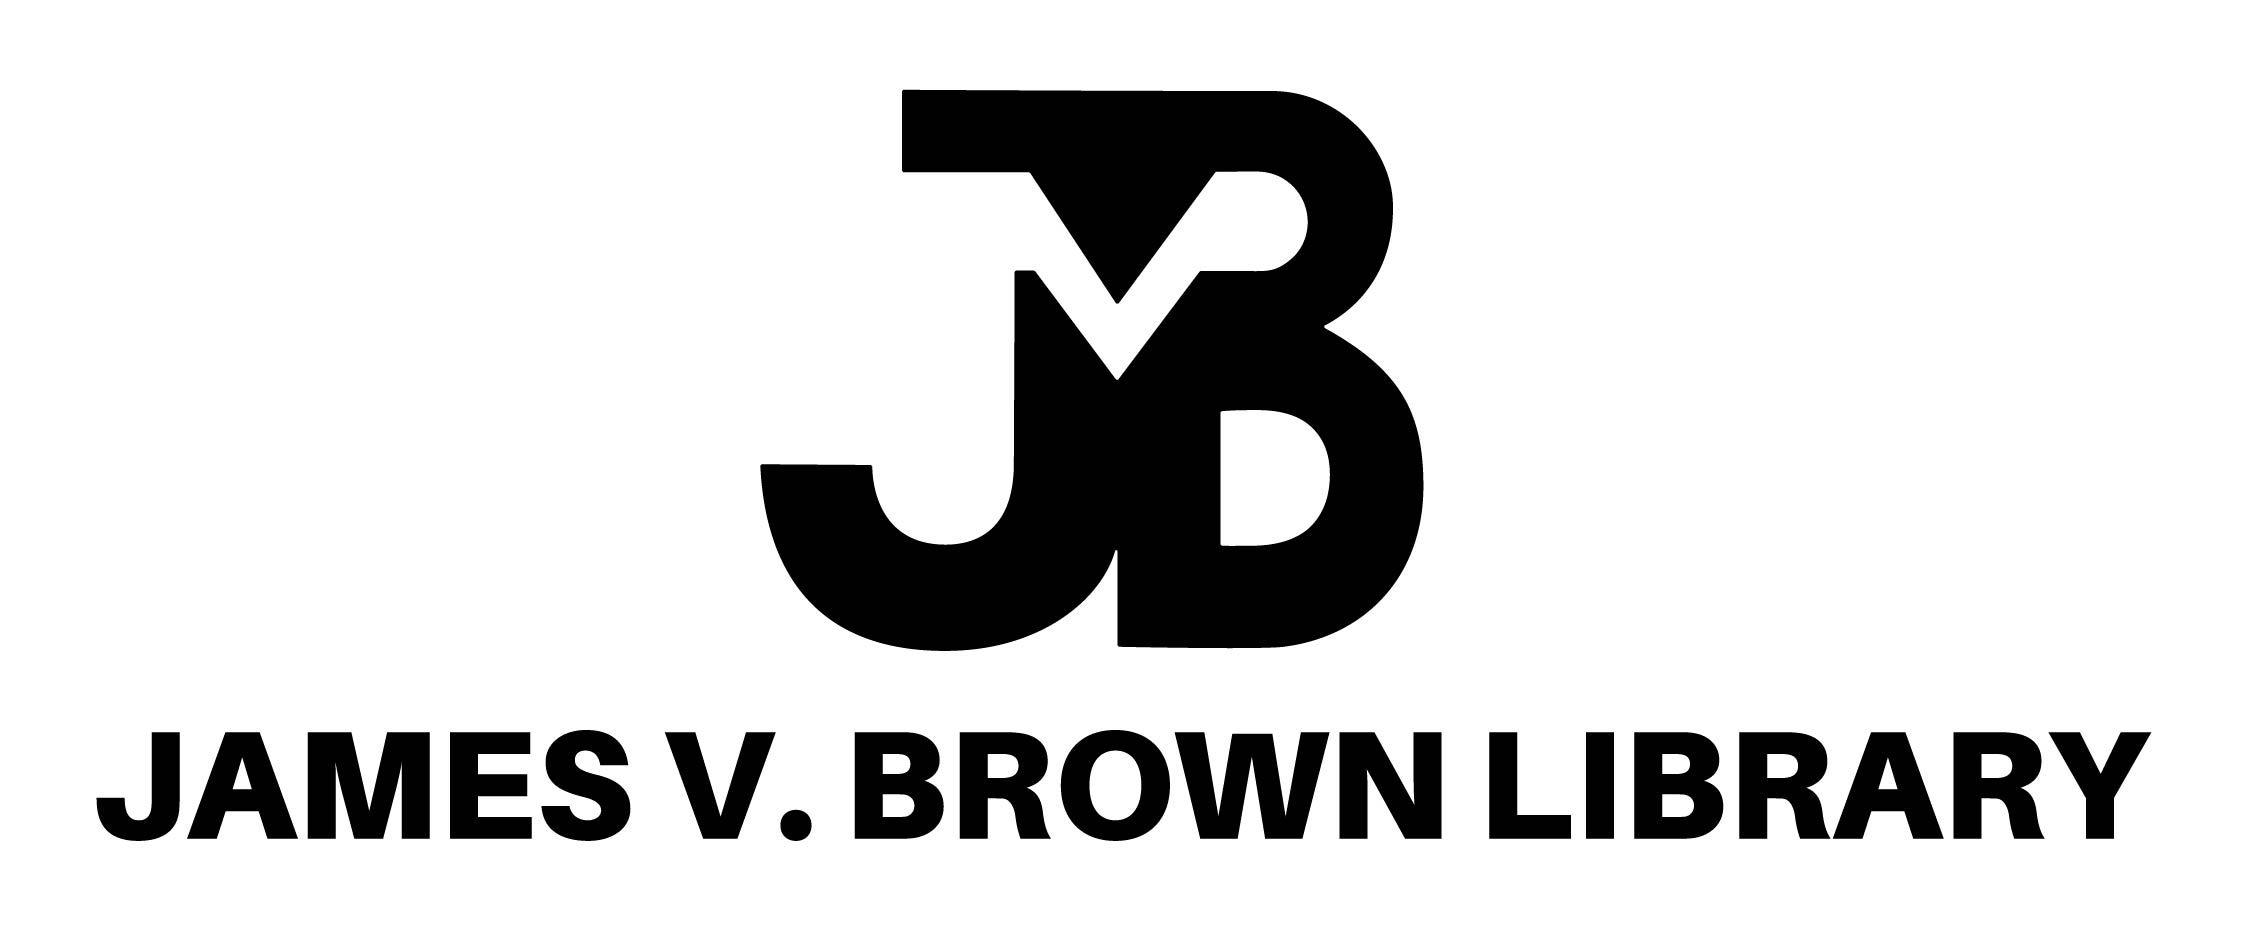 james v brown library logo